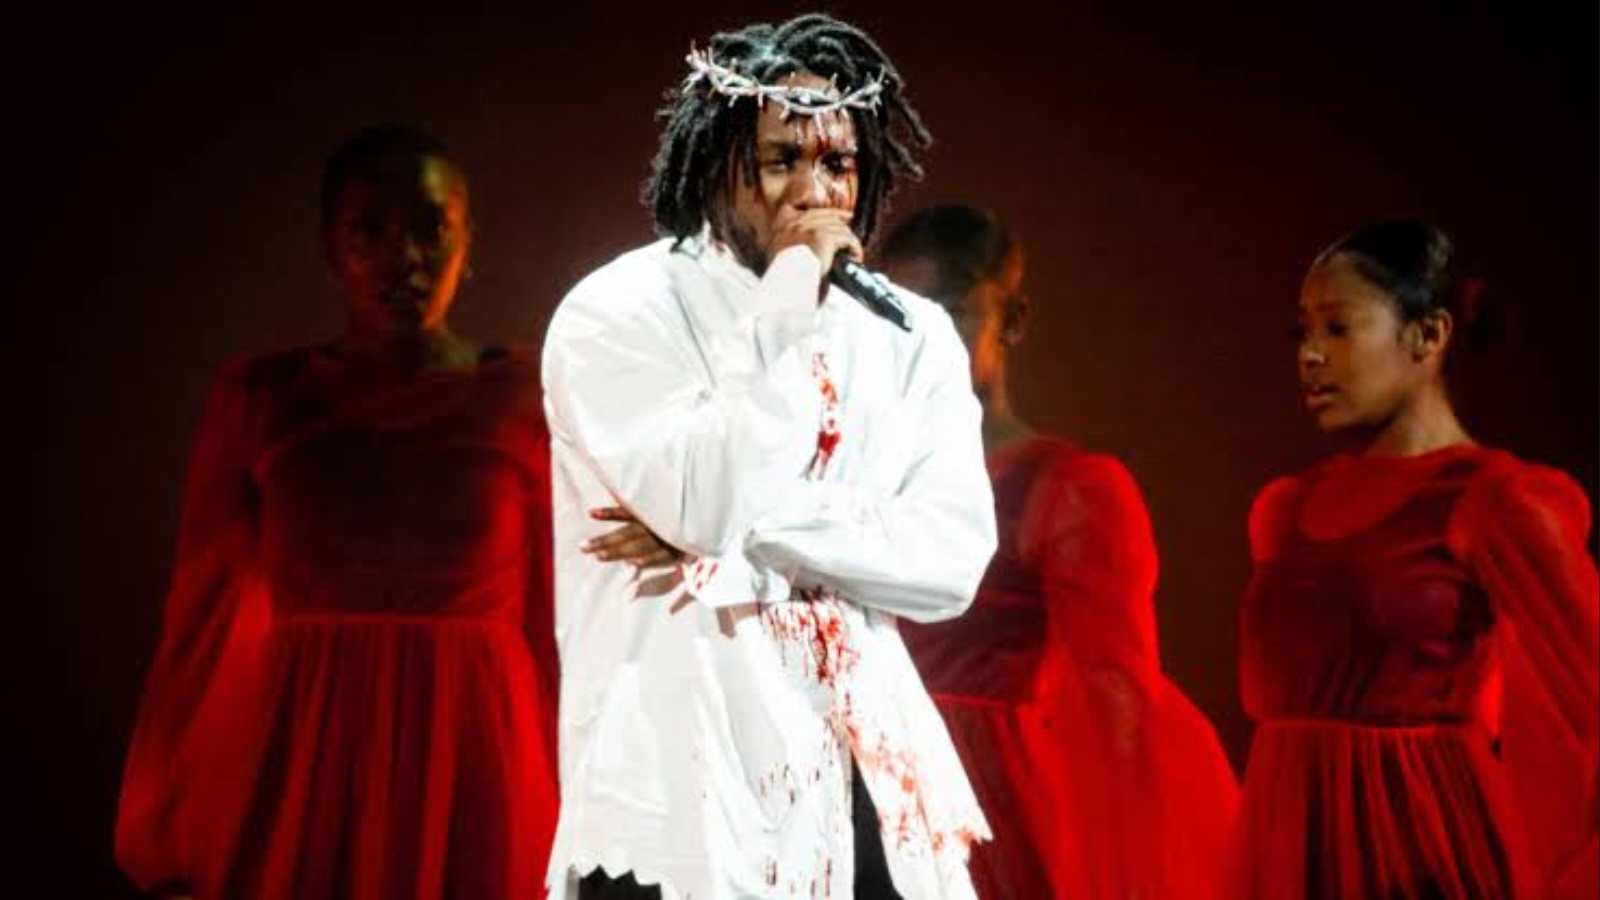 Kendrick Lamar during his Glastonbury performance